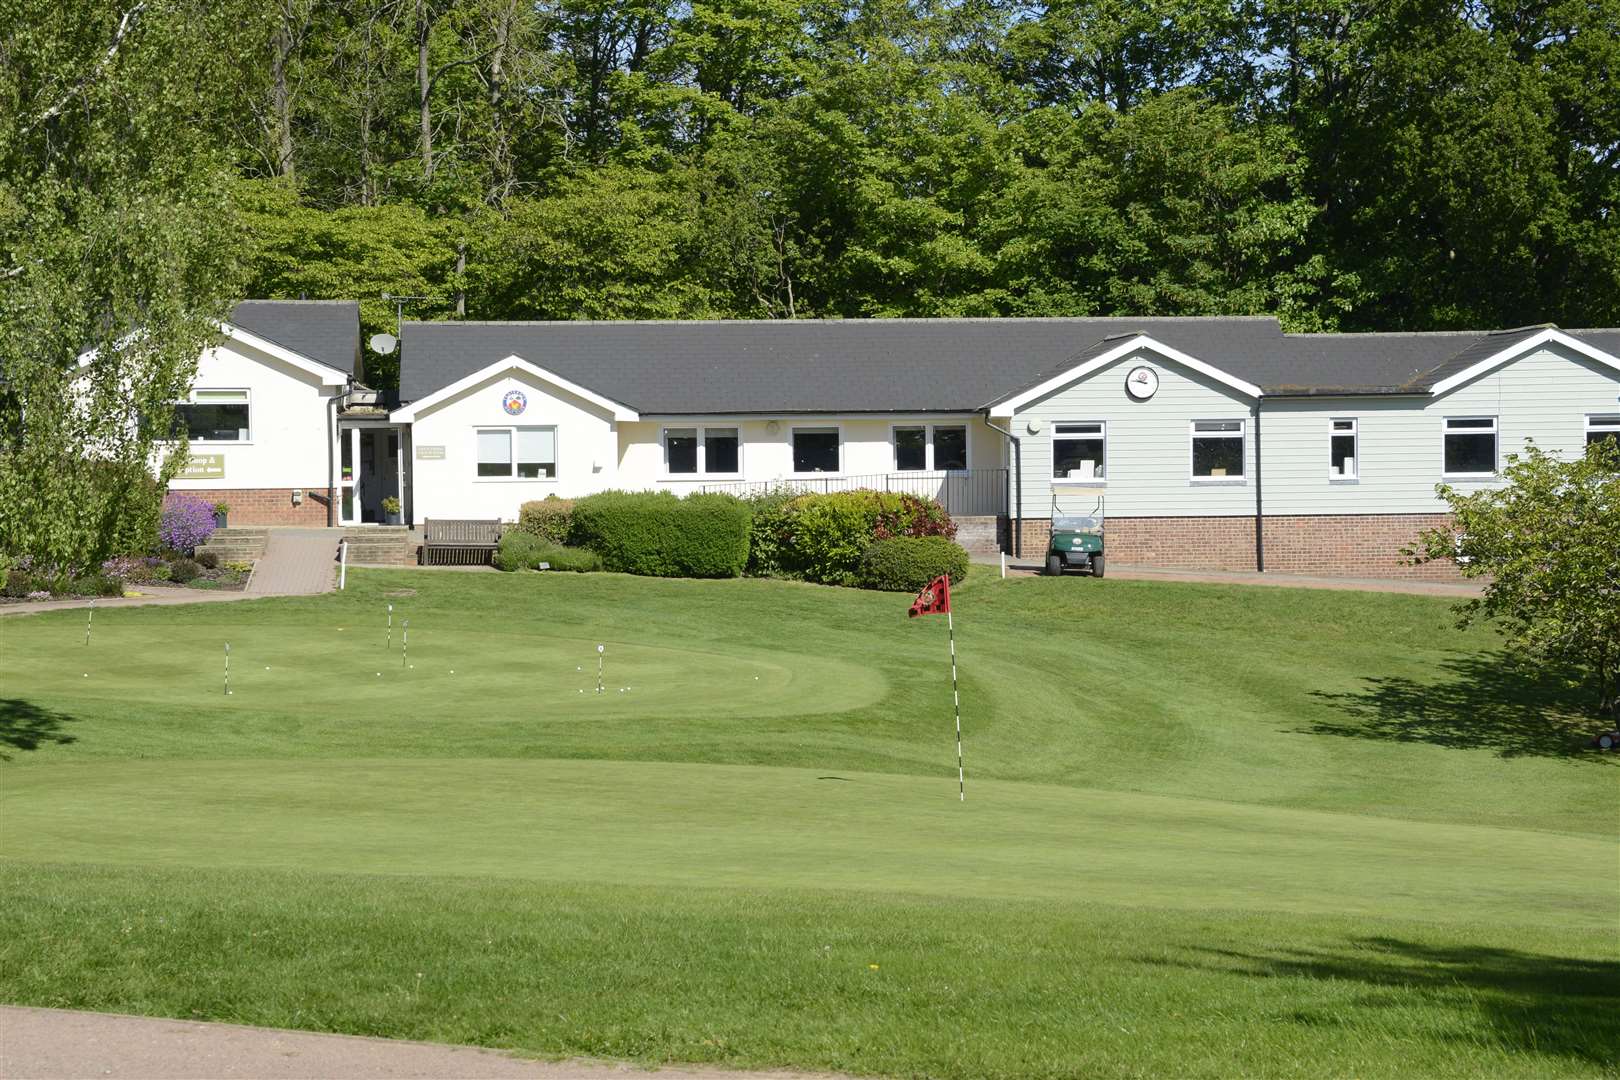 Tenterden Golf Club. Picture: Paul Amos